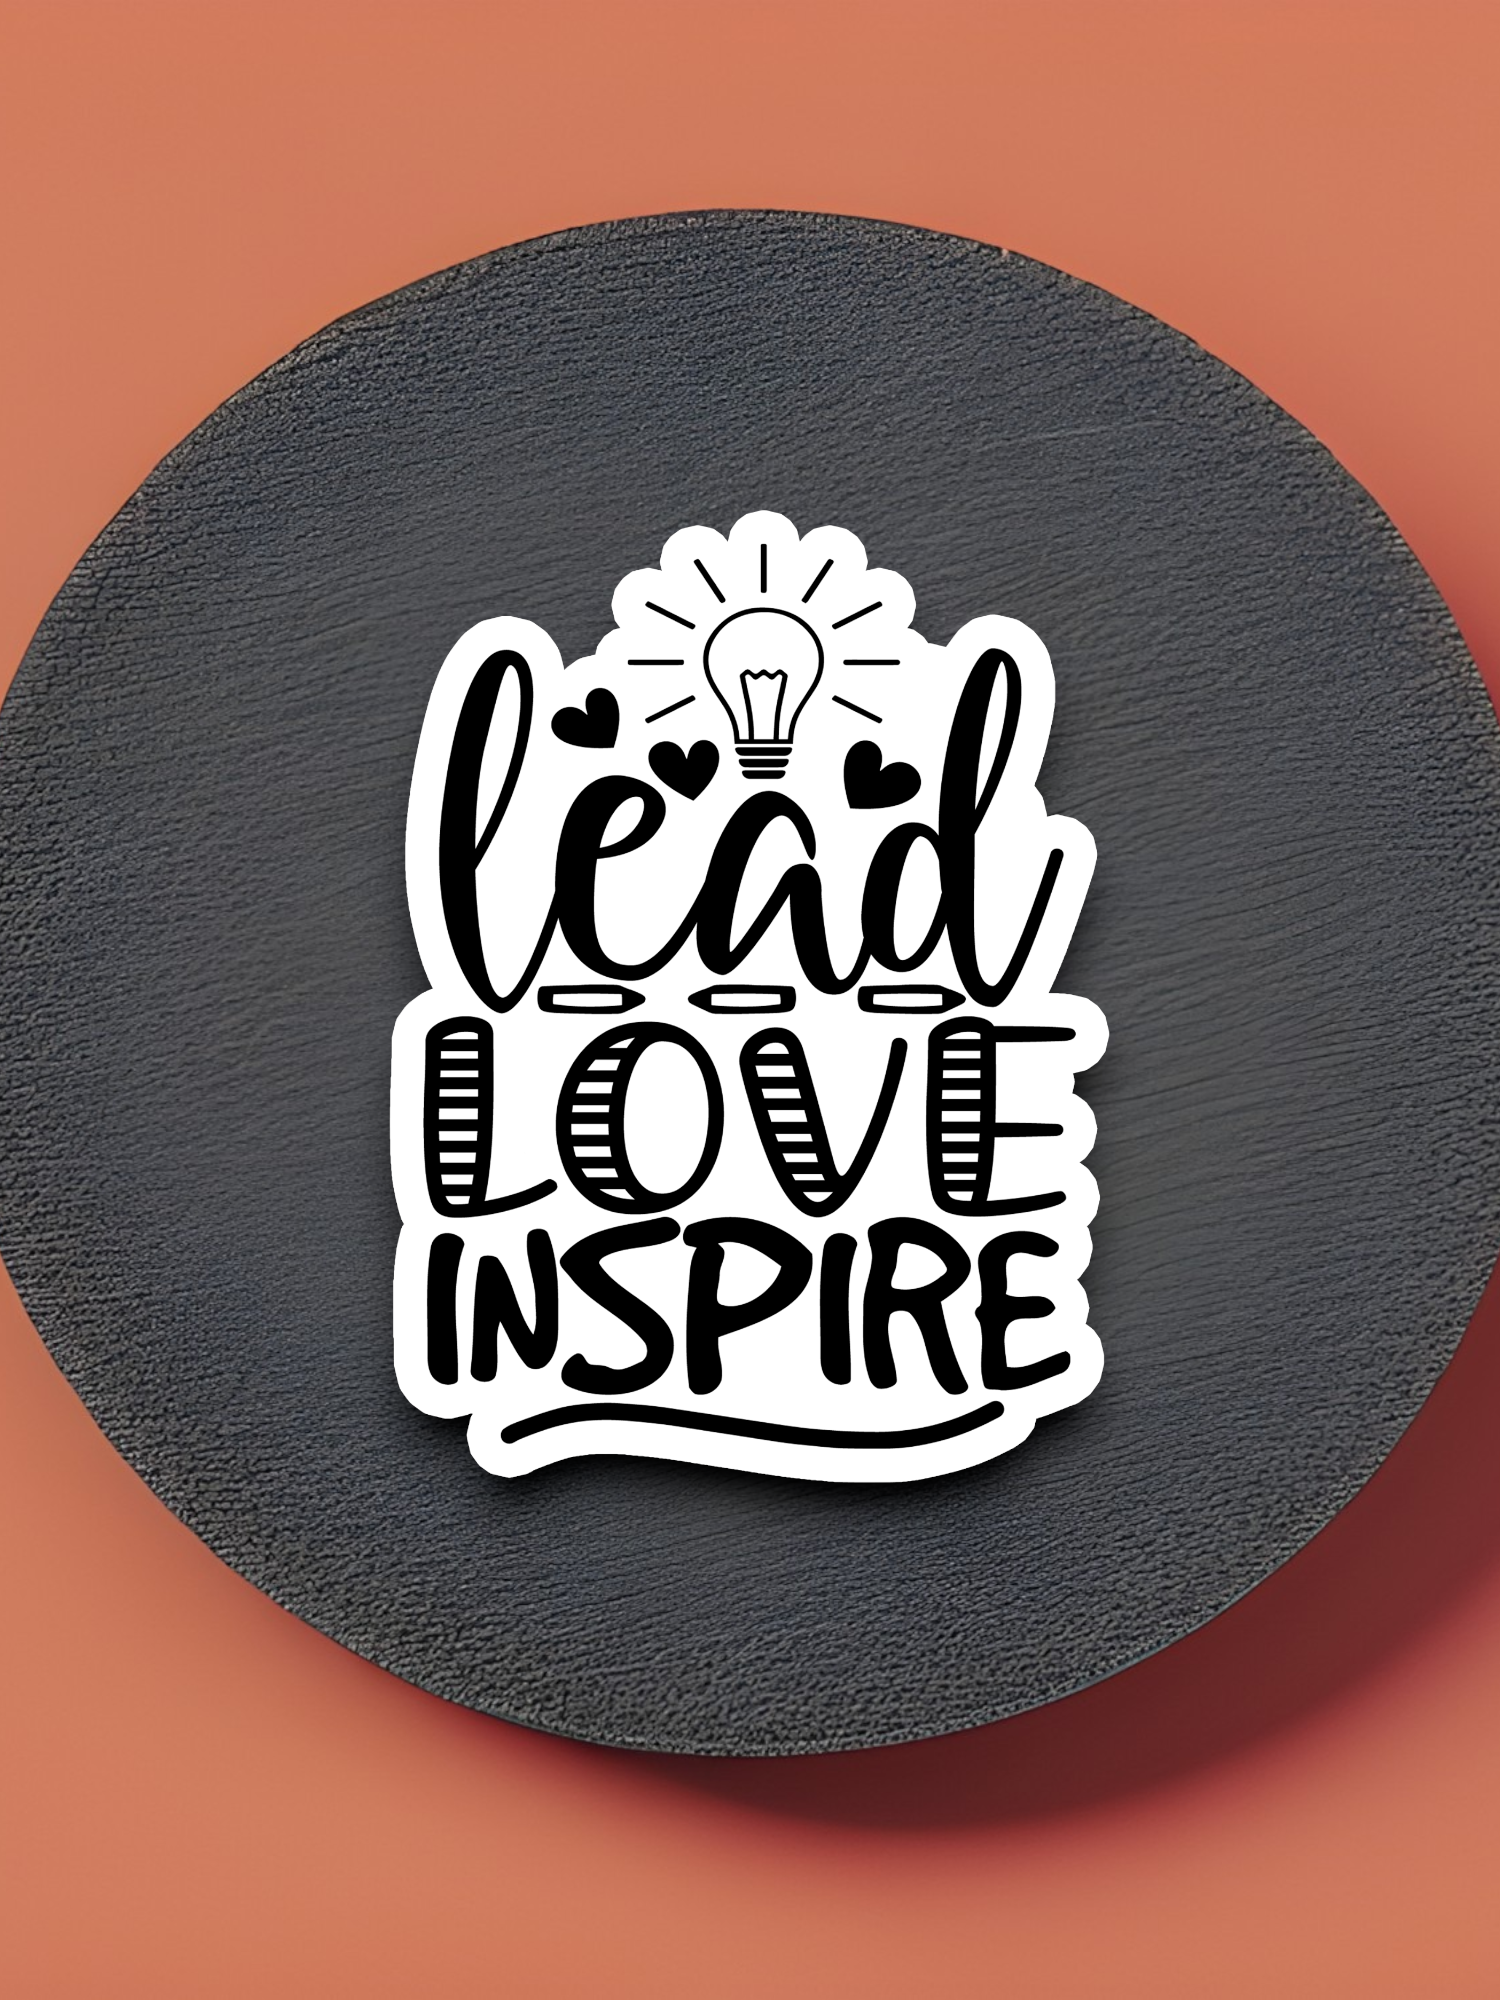 Lead Love Inspire Sticker